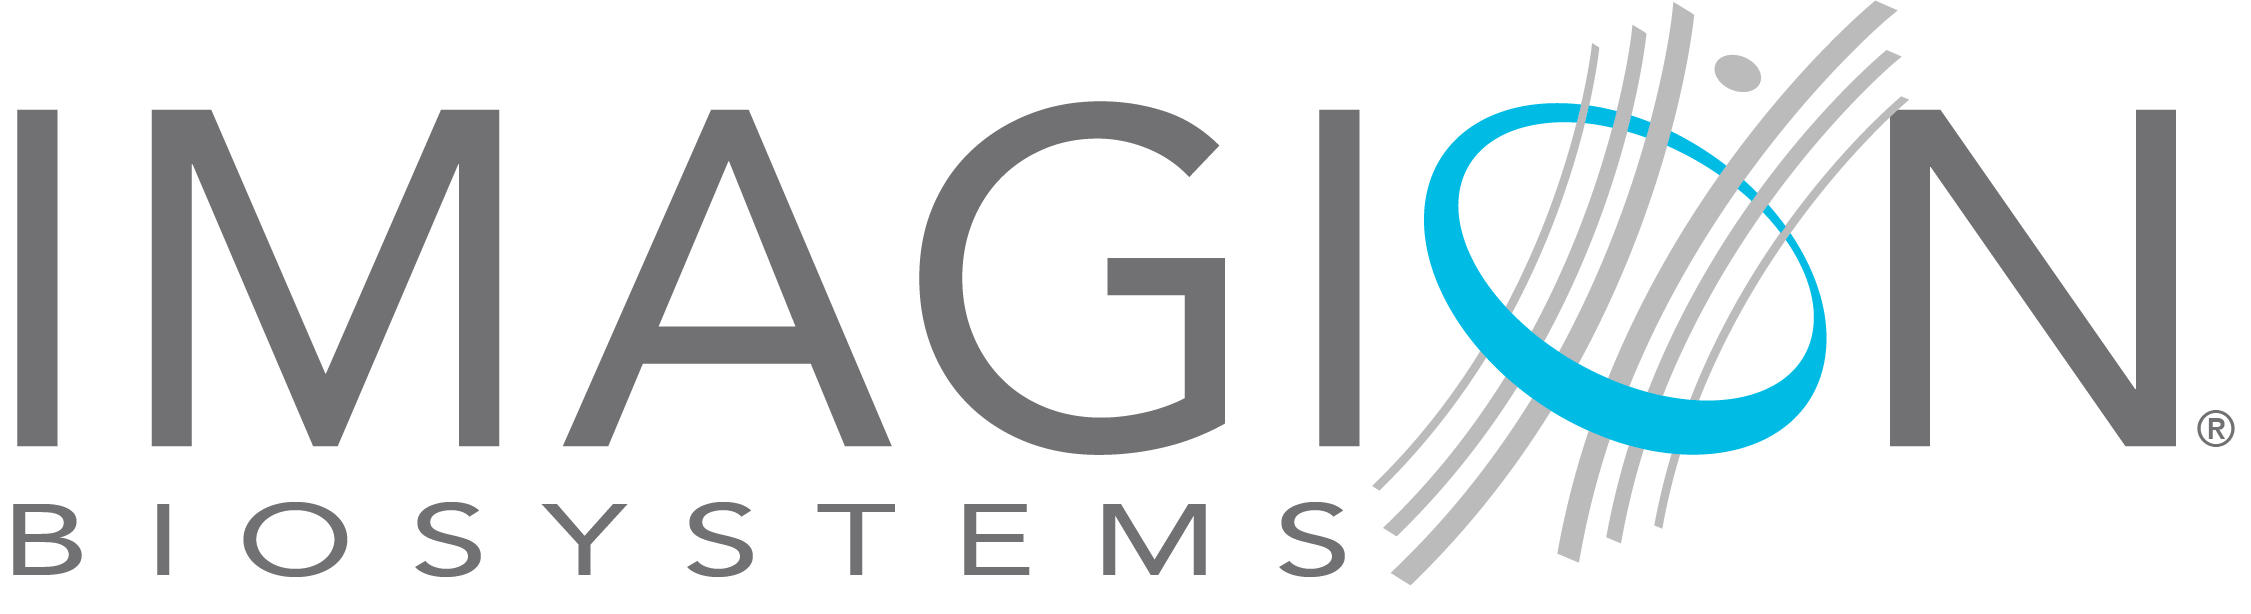 Imagion Biosystems Logo